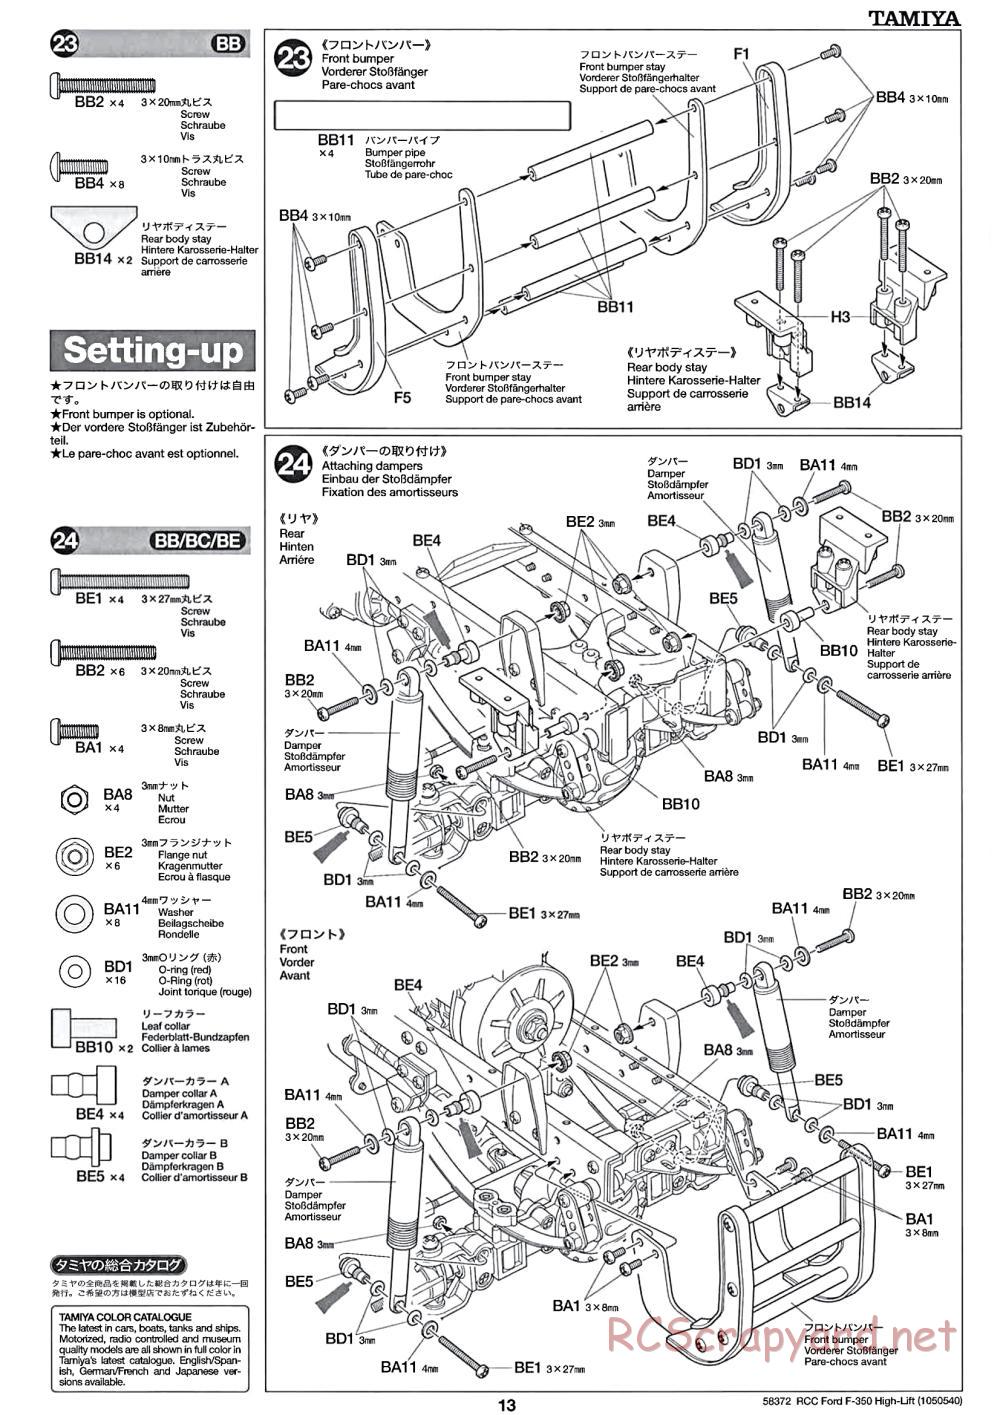 Tamiya - Ford F350 High-Lift Chassis - Manual - Page 13